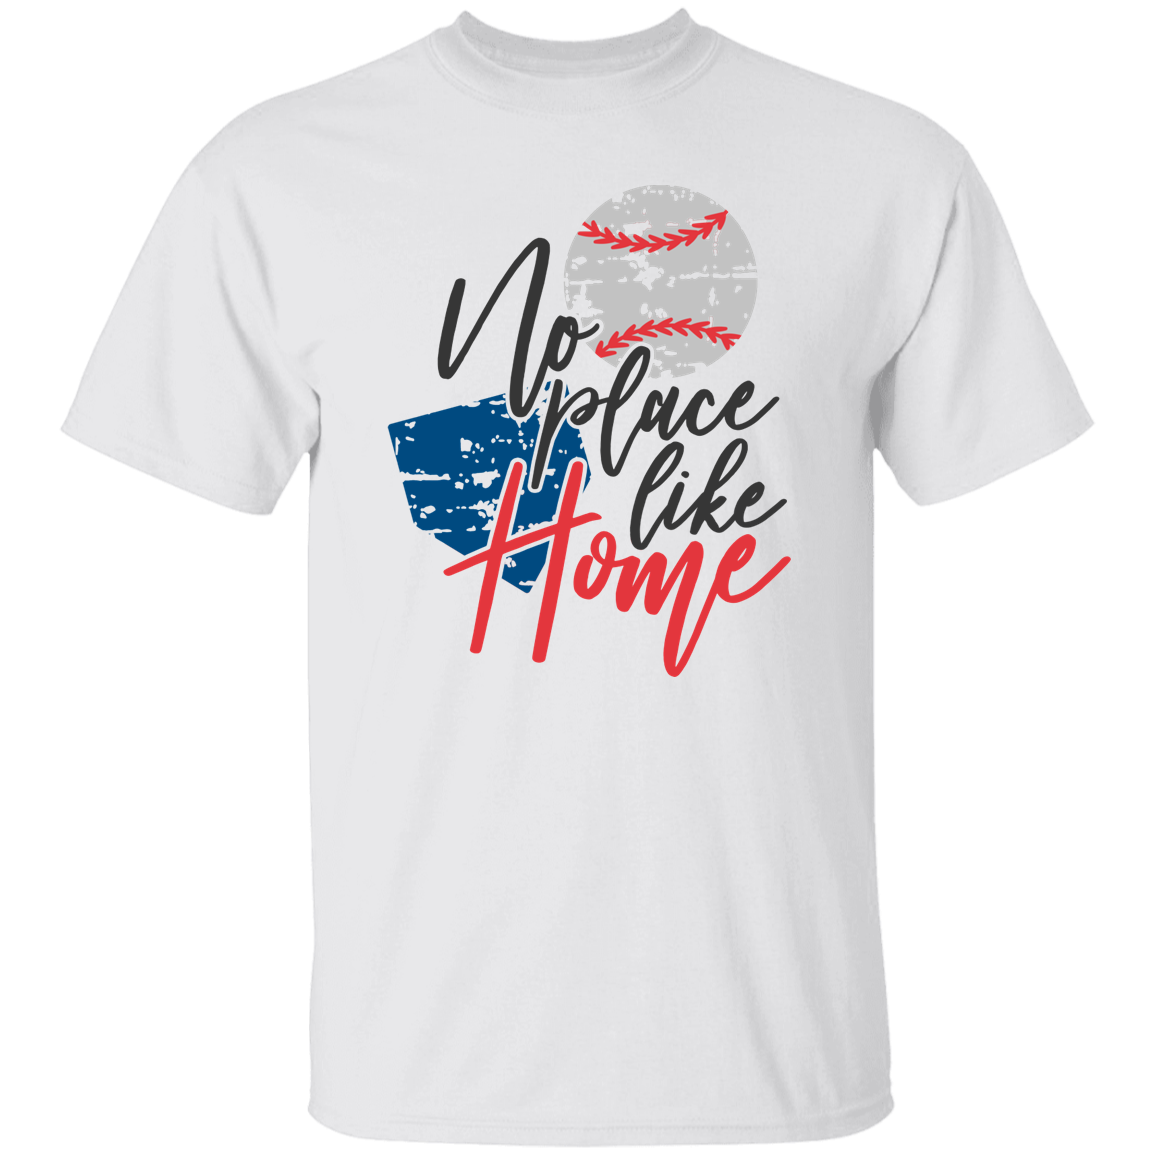 No Place Like Home Baseball 5.3 oz. T-Shirt